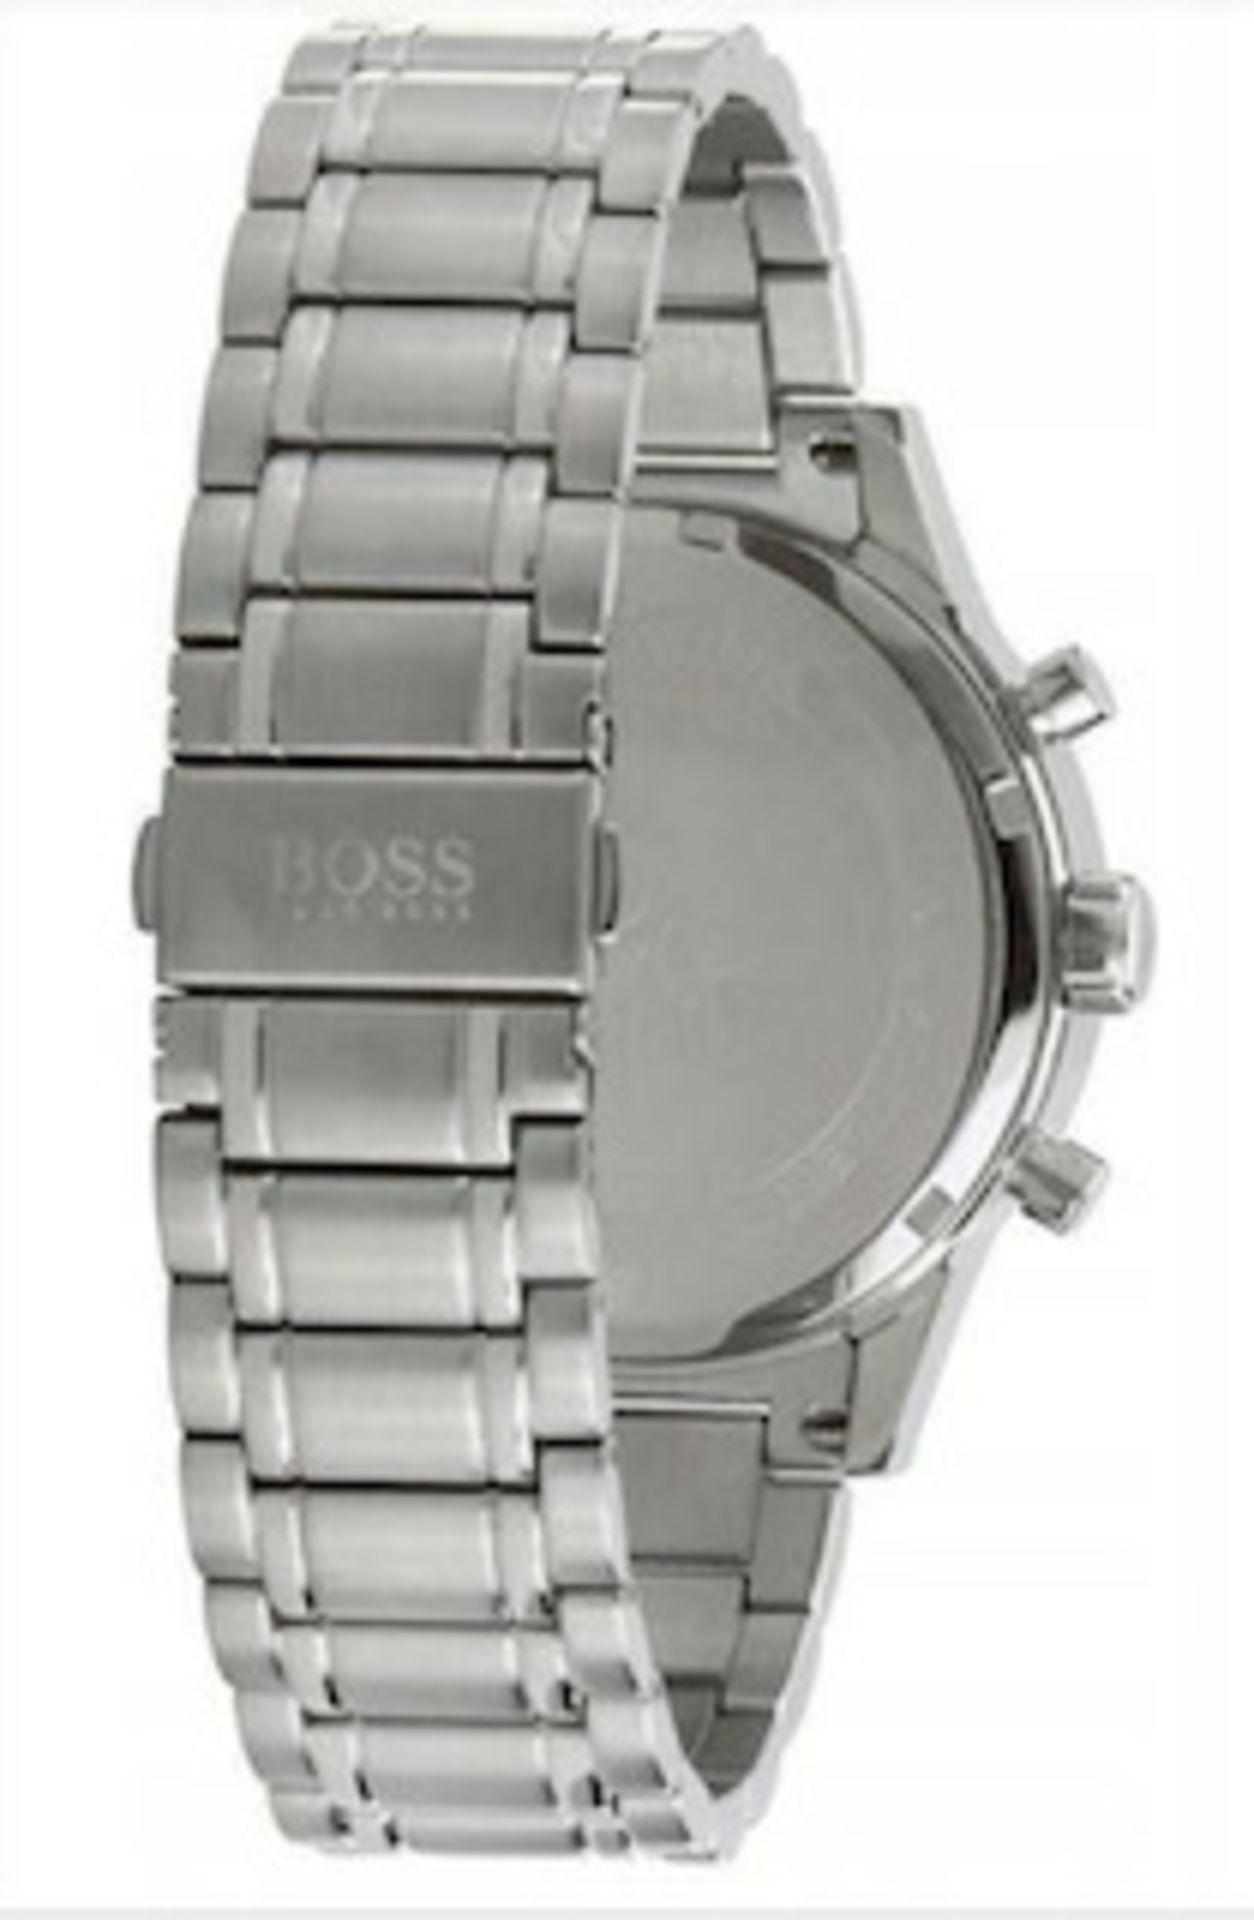 Hugo Boss Men's Aeroliner Silver Bracelet Chronograph Watch 1513182 Authentic Men's Classic - Image 5 of 7